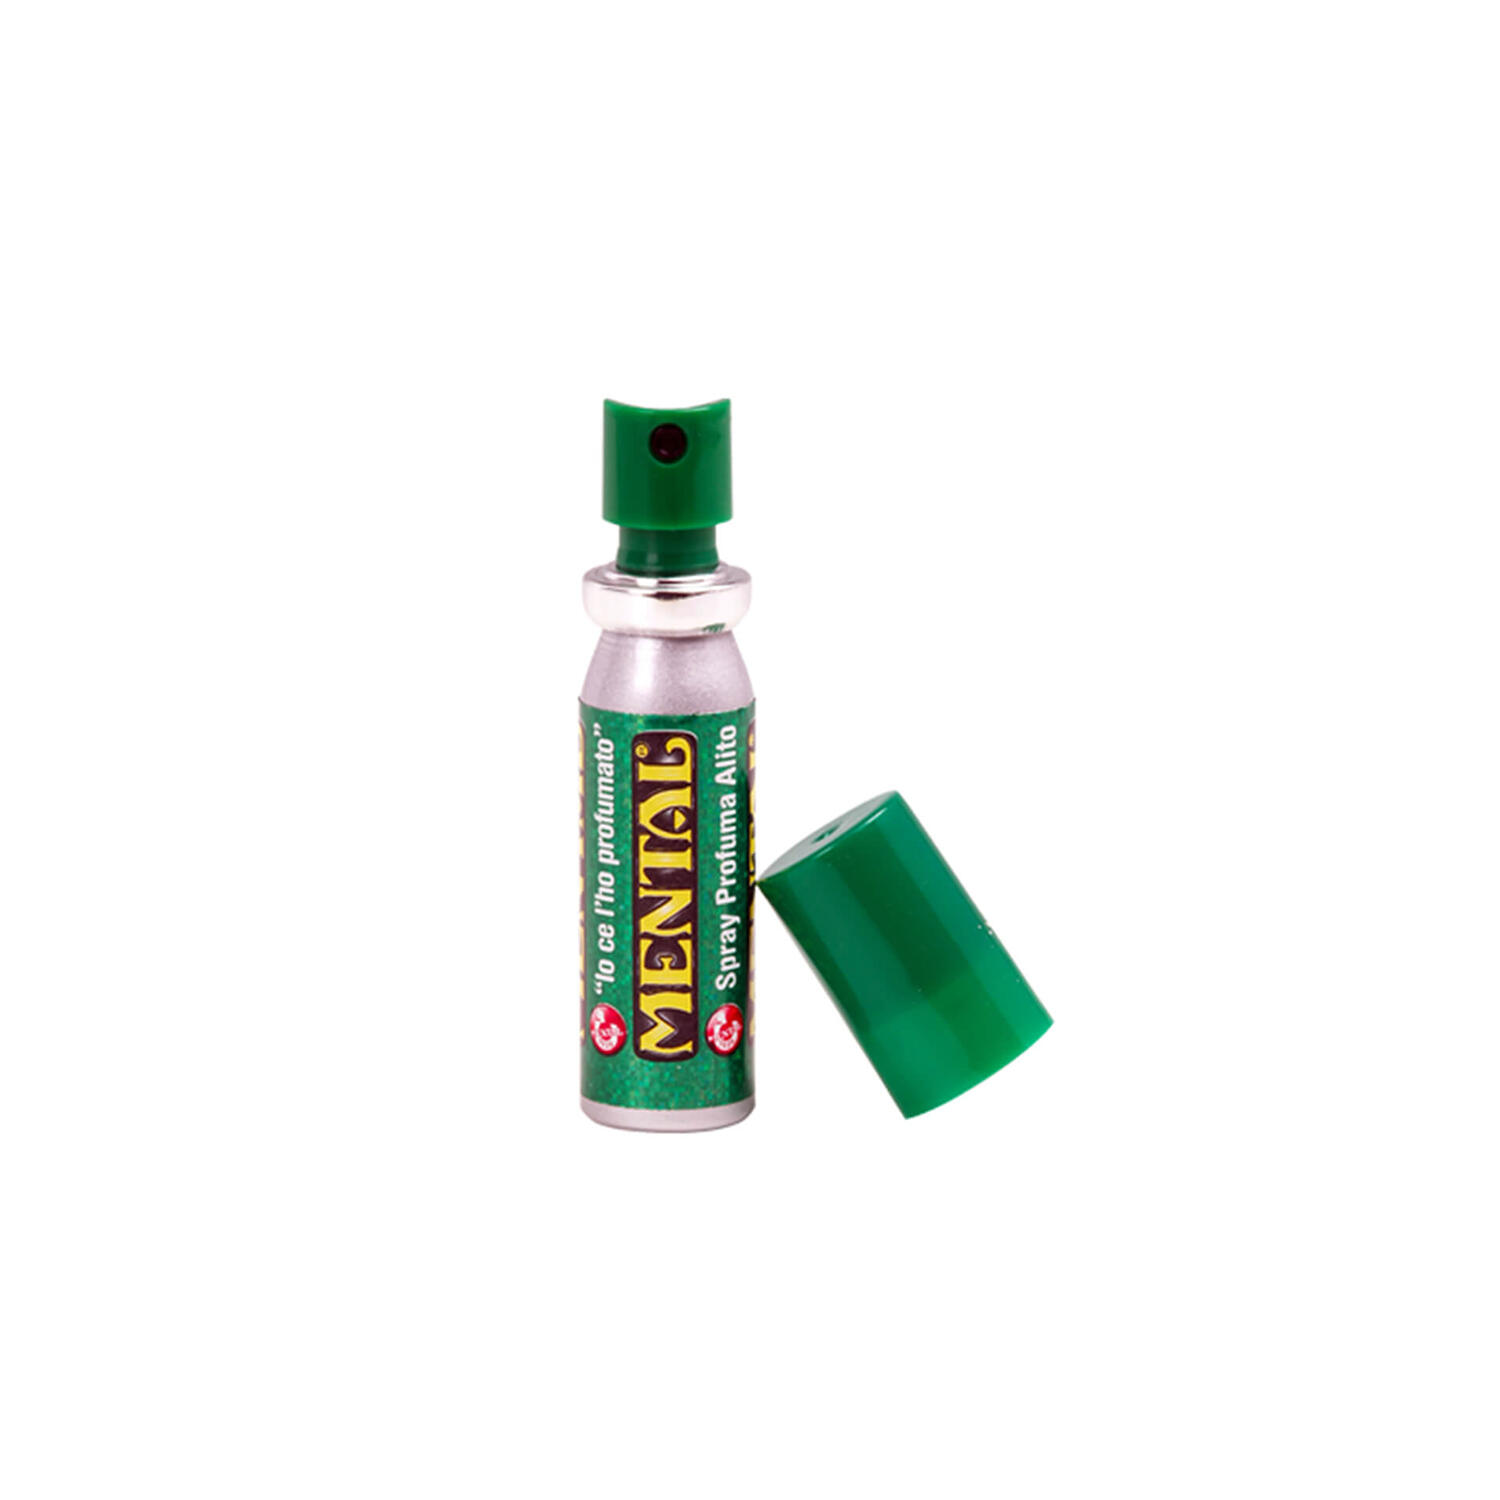 Spray Mental Profuma Alito – spray 18 ml - Pacchetto Singolo  - Spray